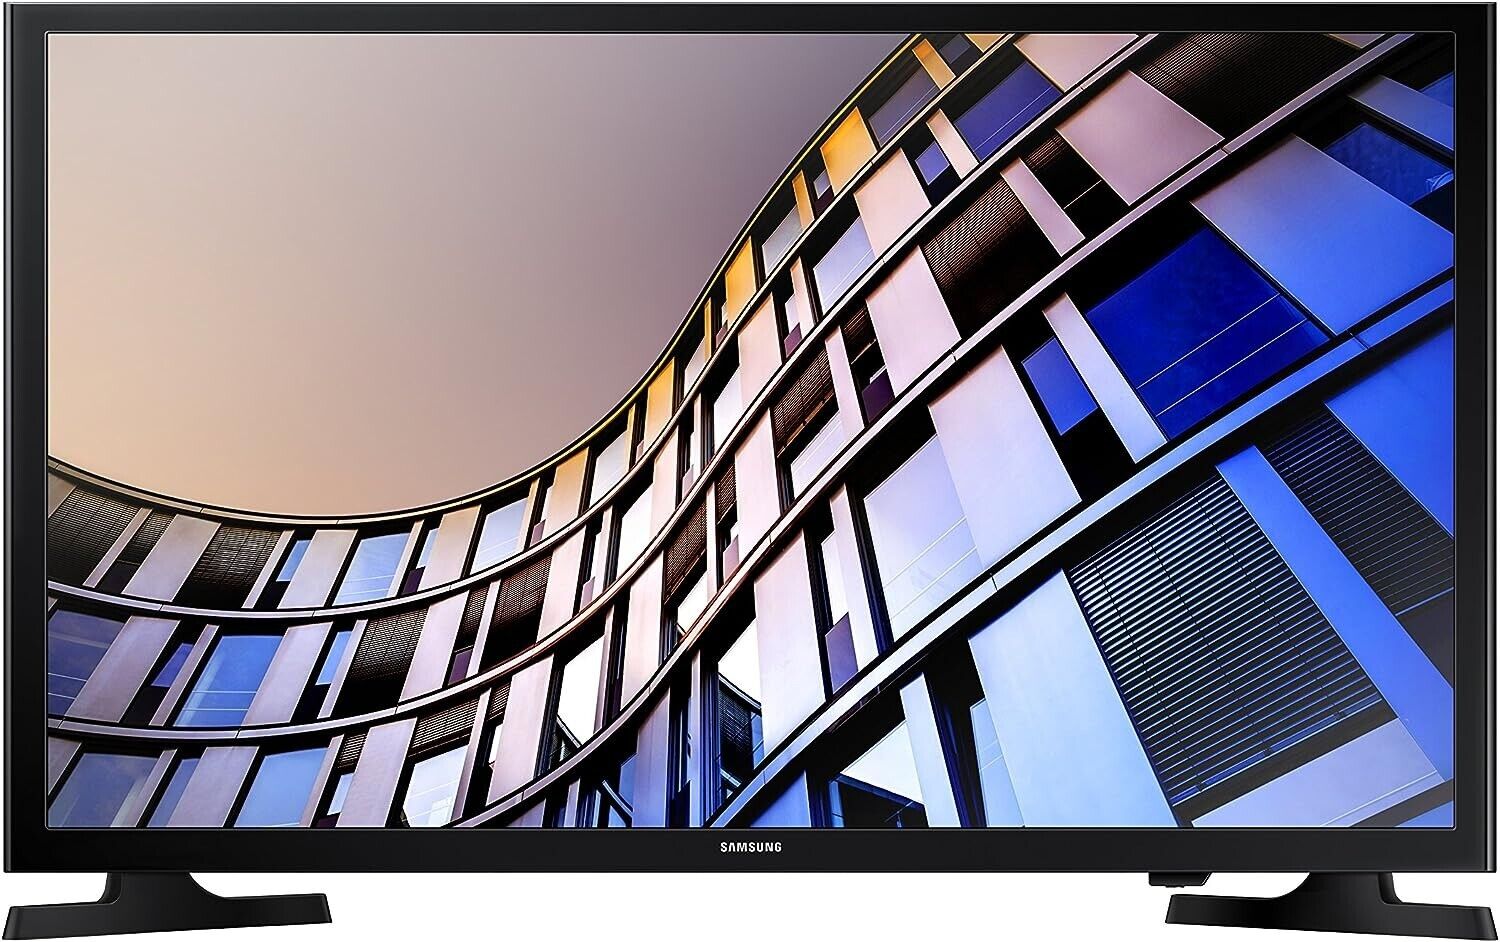 Samsung M4500 32" Class HD 720p LED Smart TV  (2020)